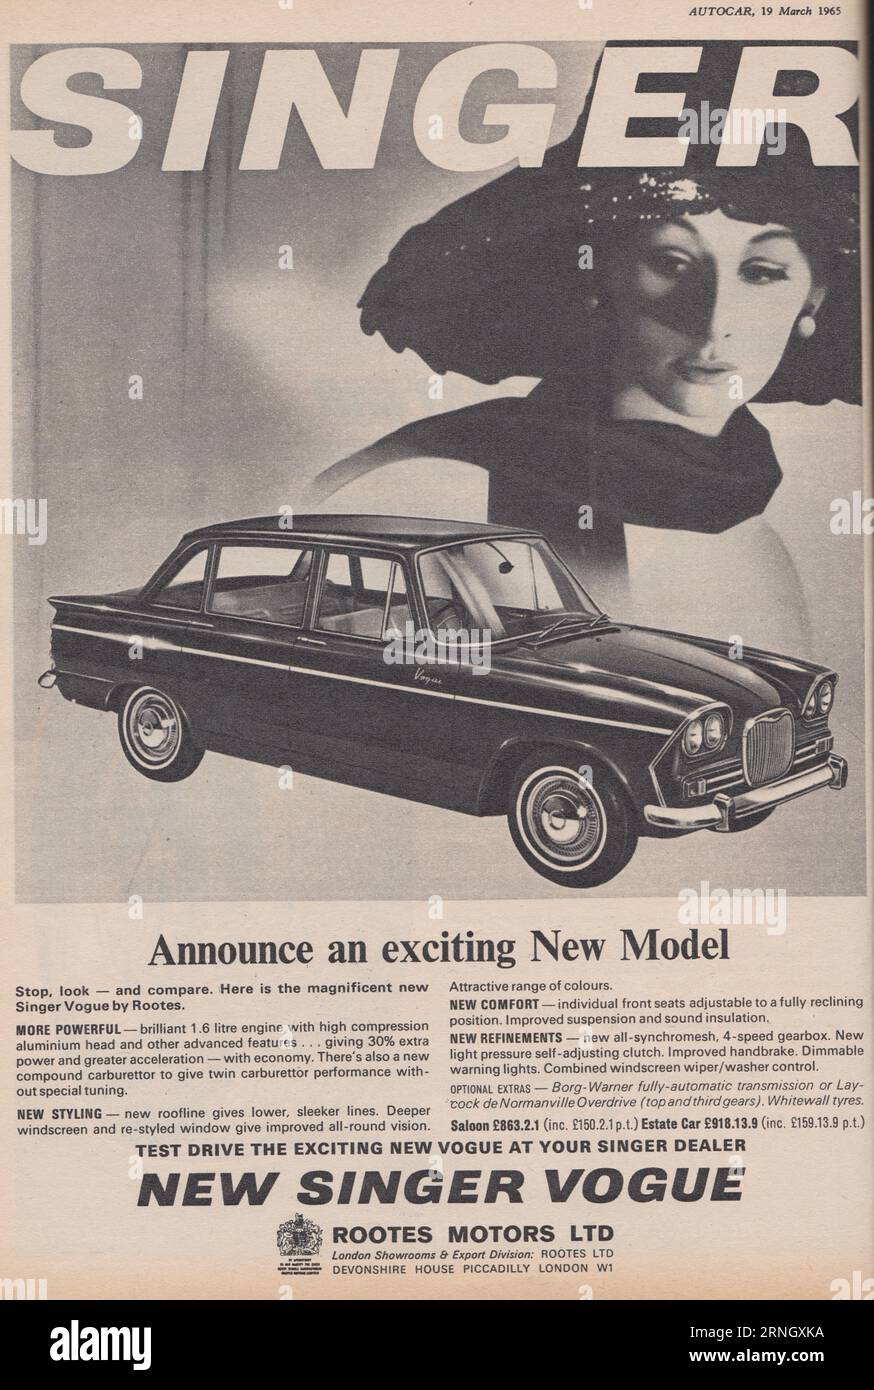 Rootes Motors Ltd vintage advert - New Singer Vogue. Stock Photo